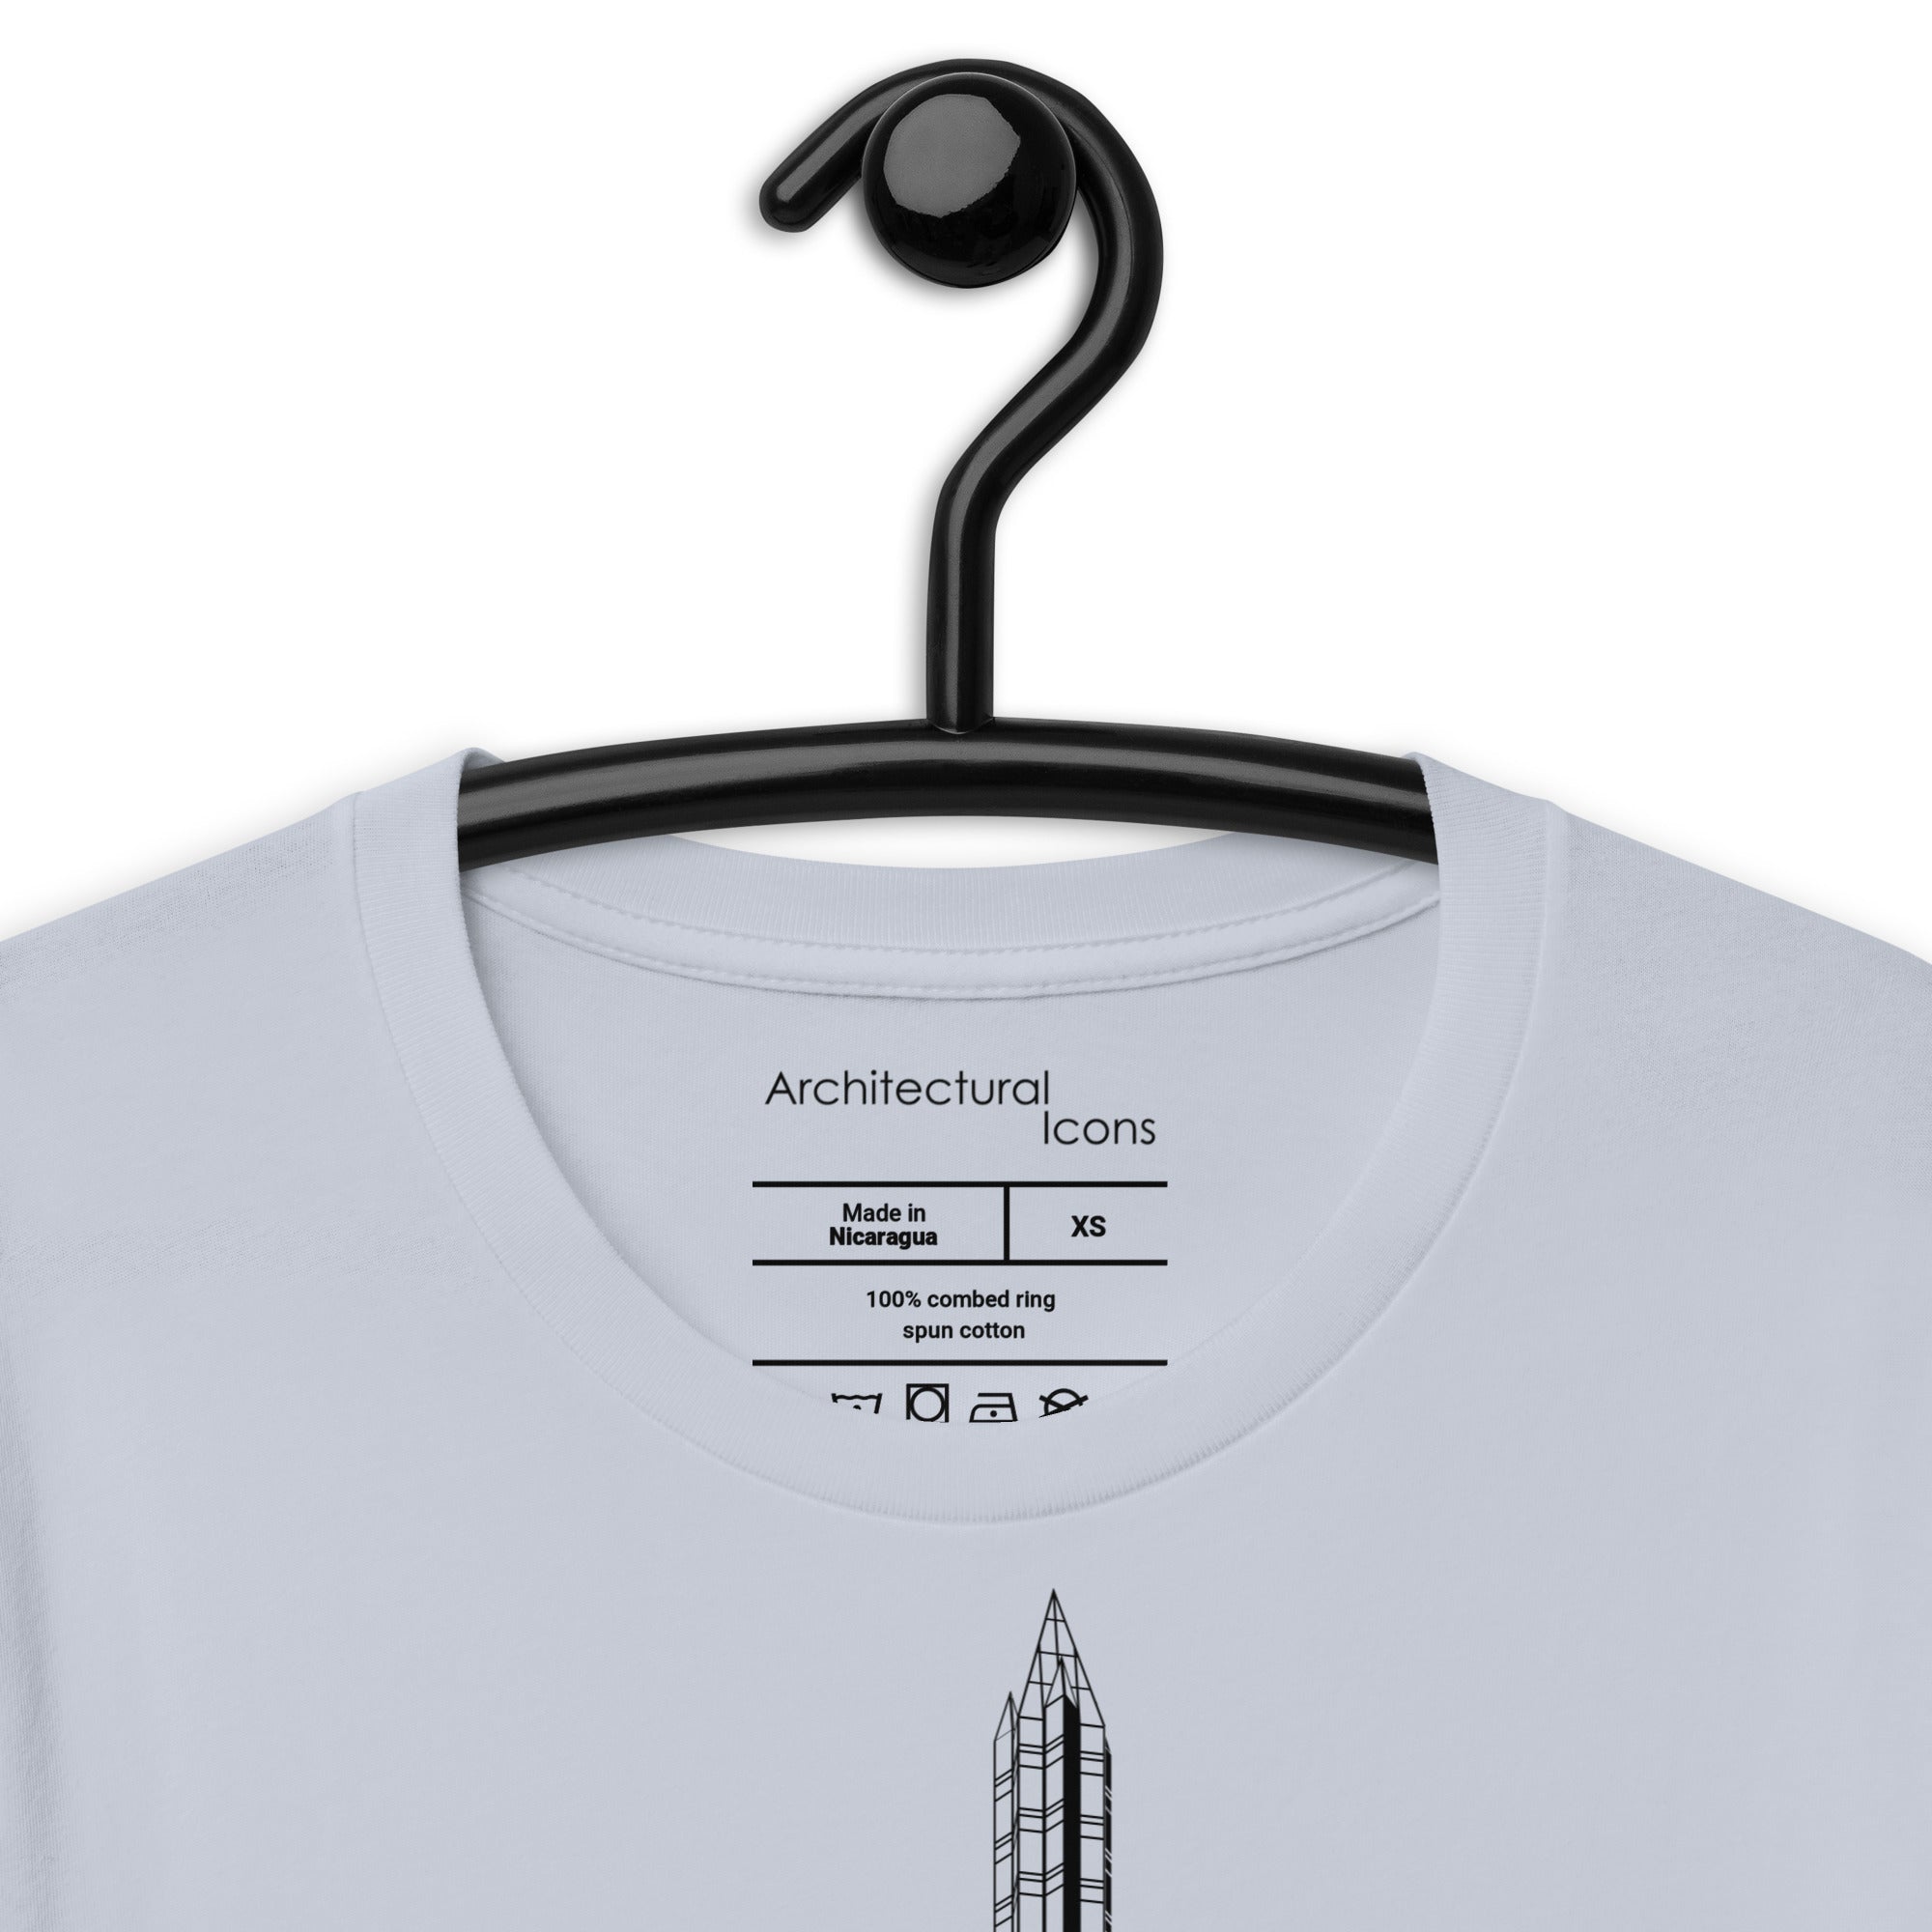 PPG Place Unisex T-Shirts